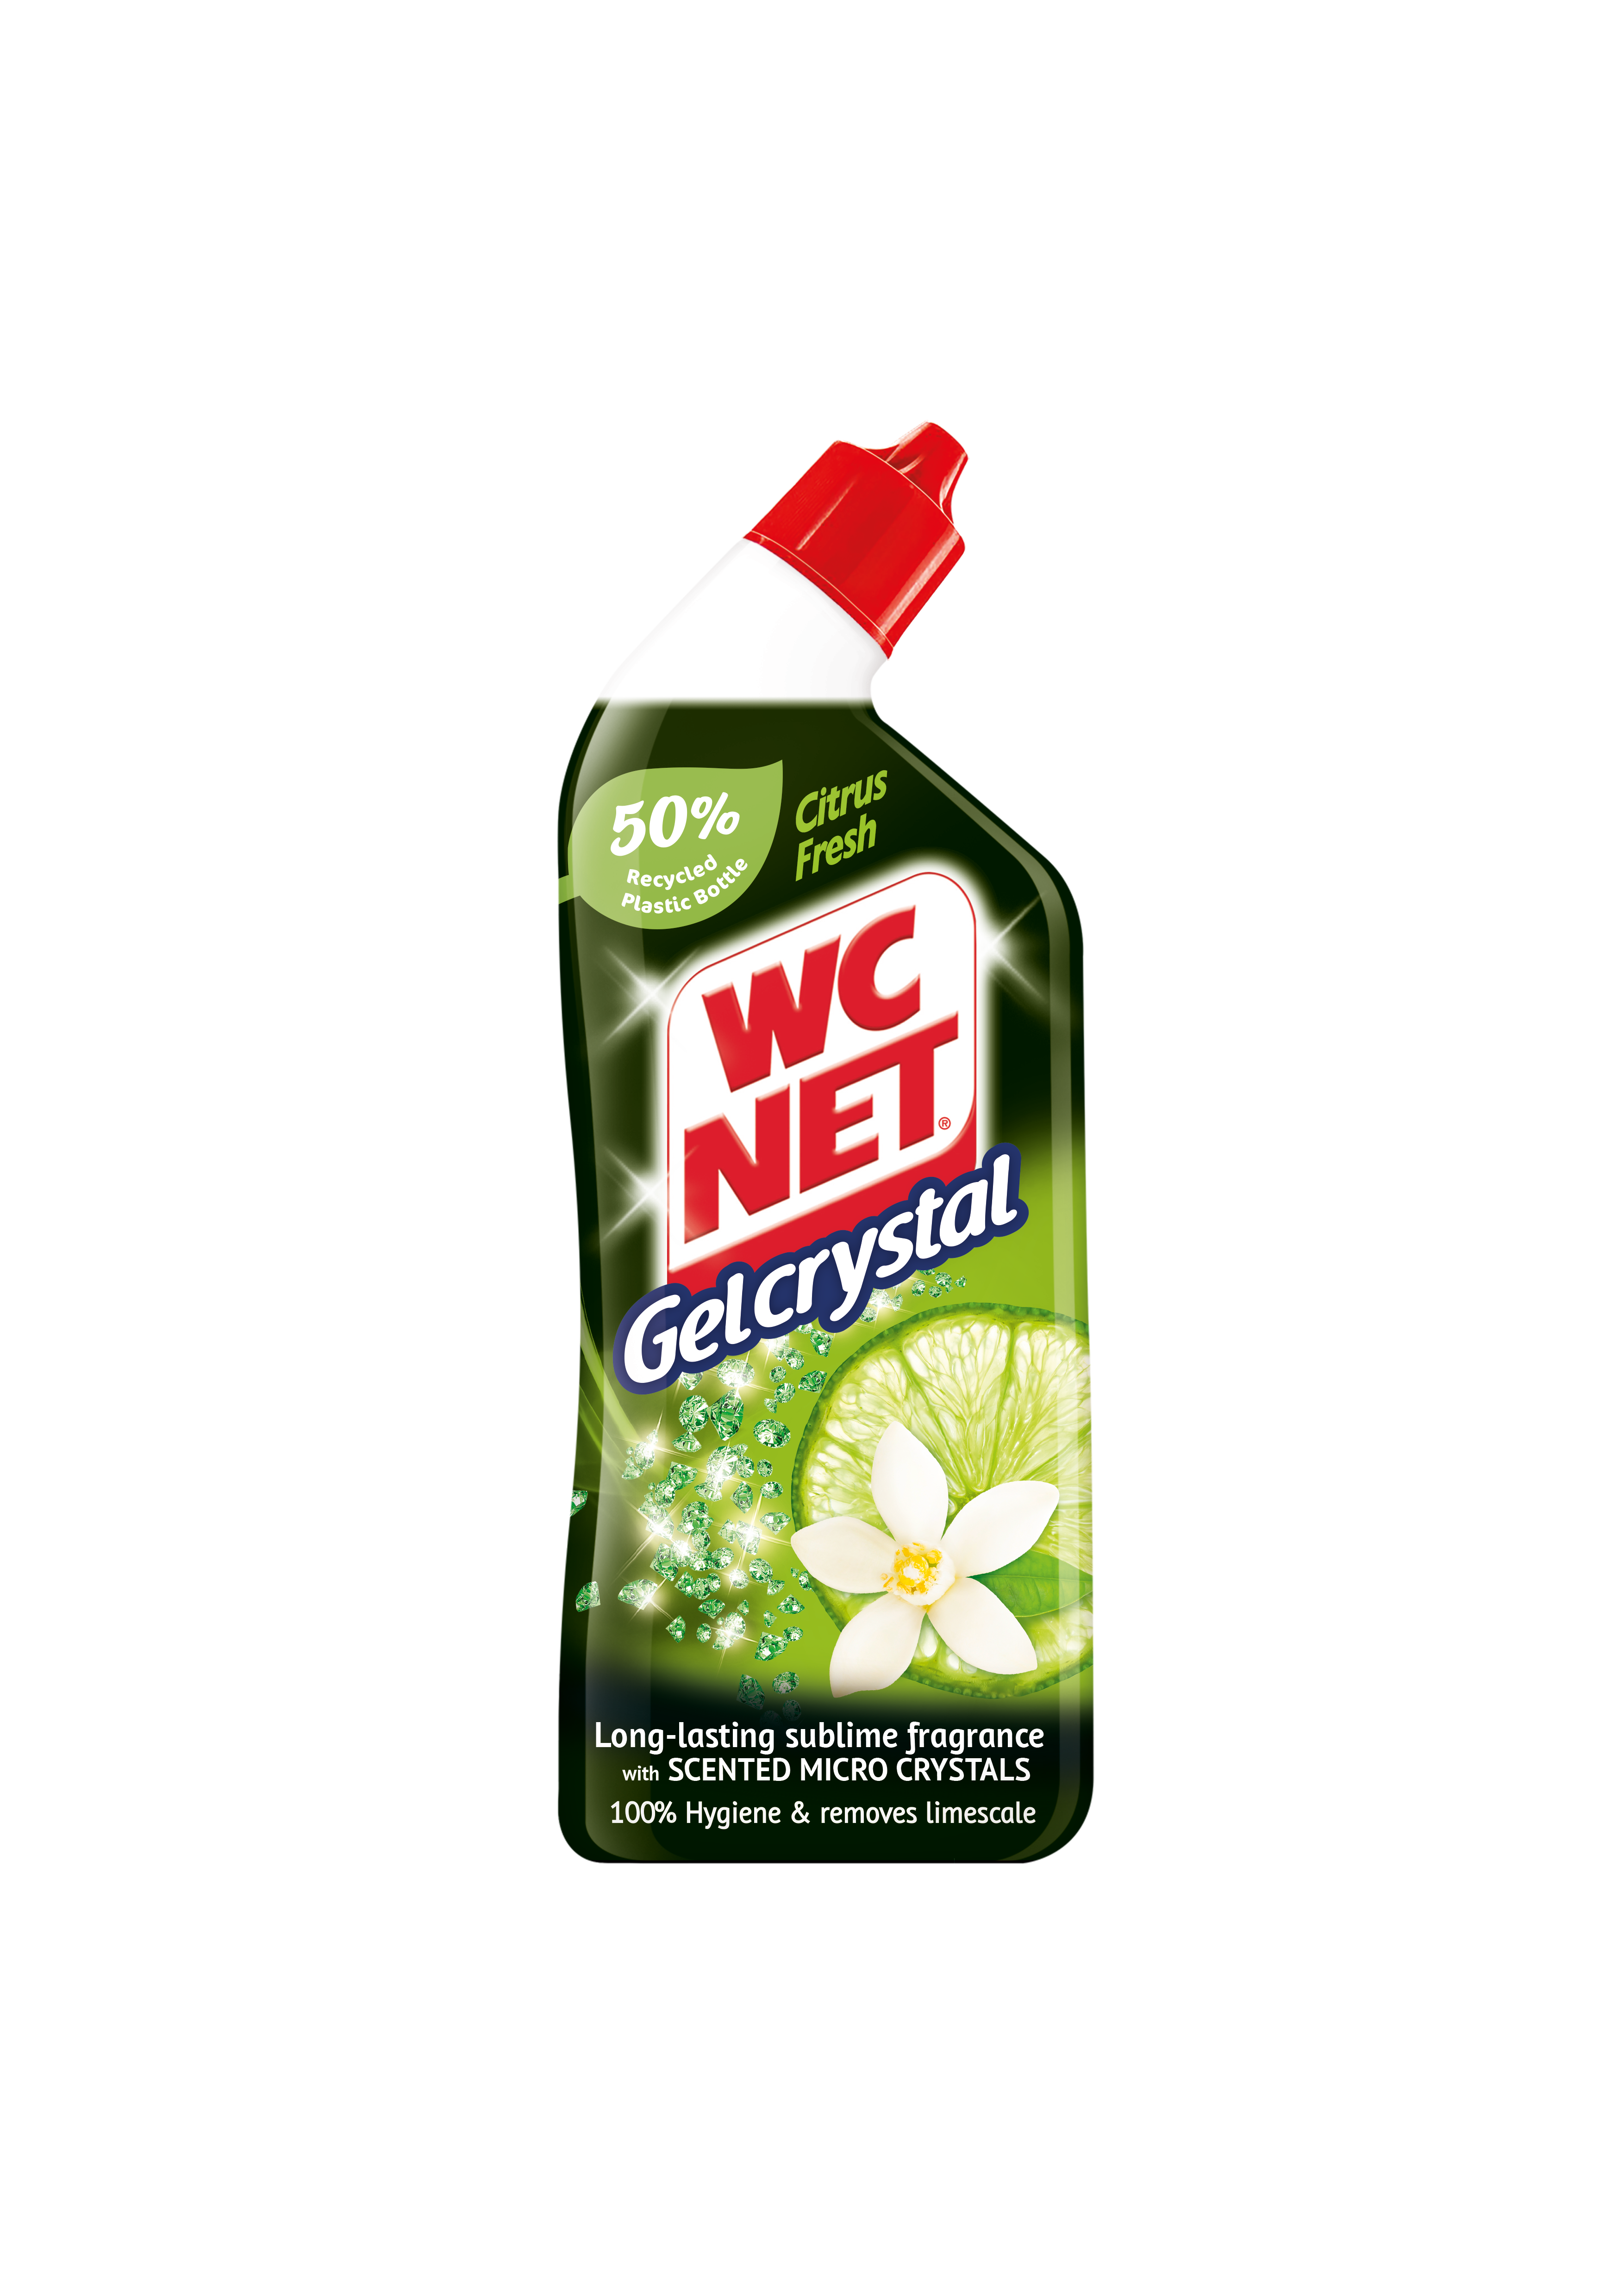 WC NET Crystal Gel Lime Fresh